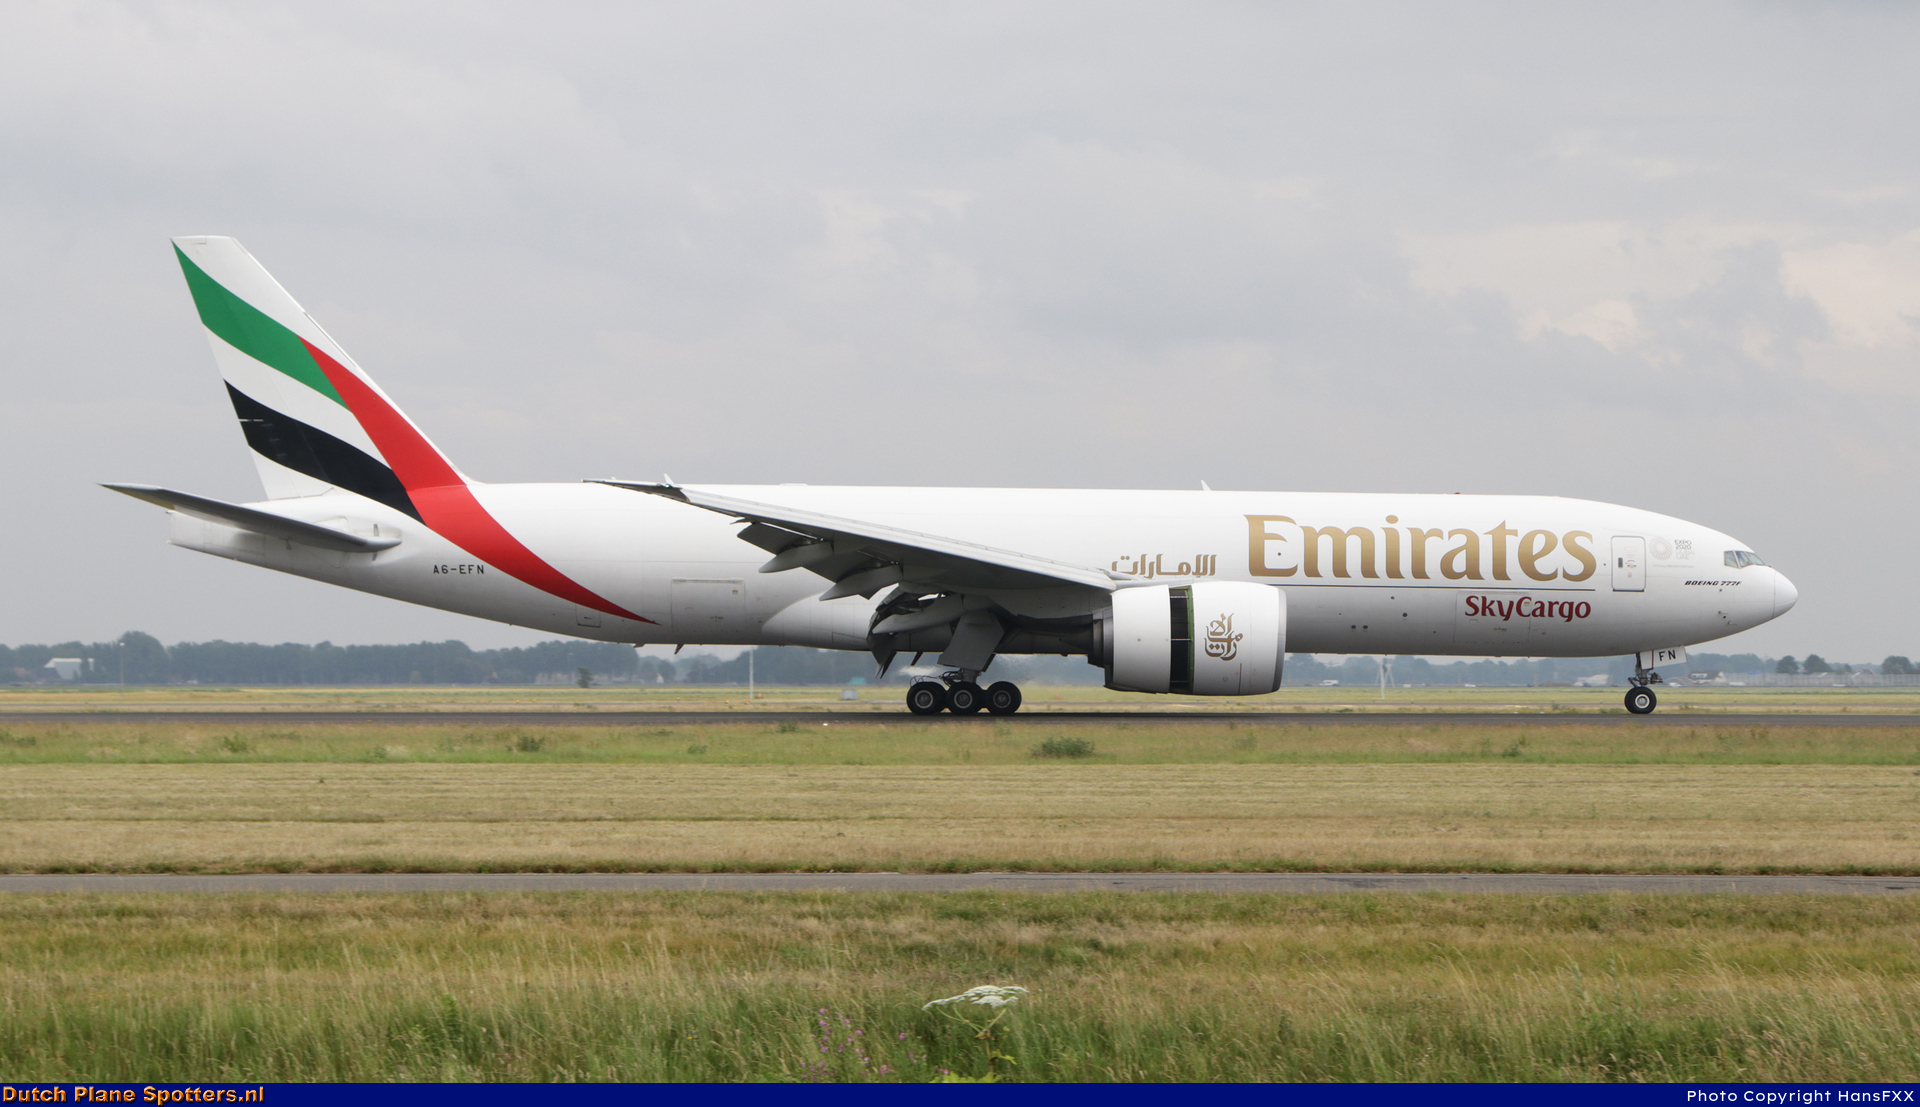 A6-EFN Boeing 777-F Emirates Sky Cargo by HansFXX